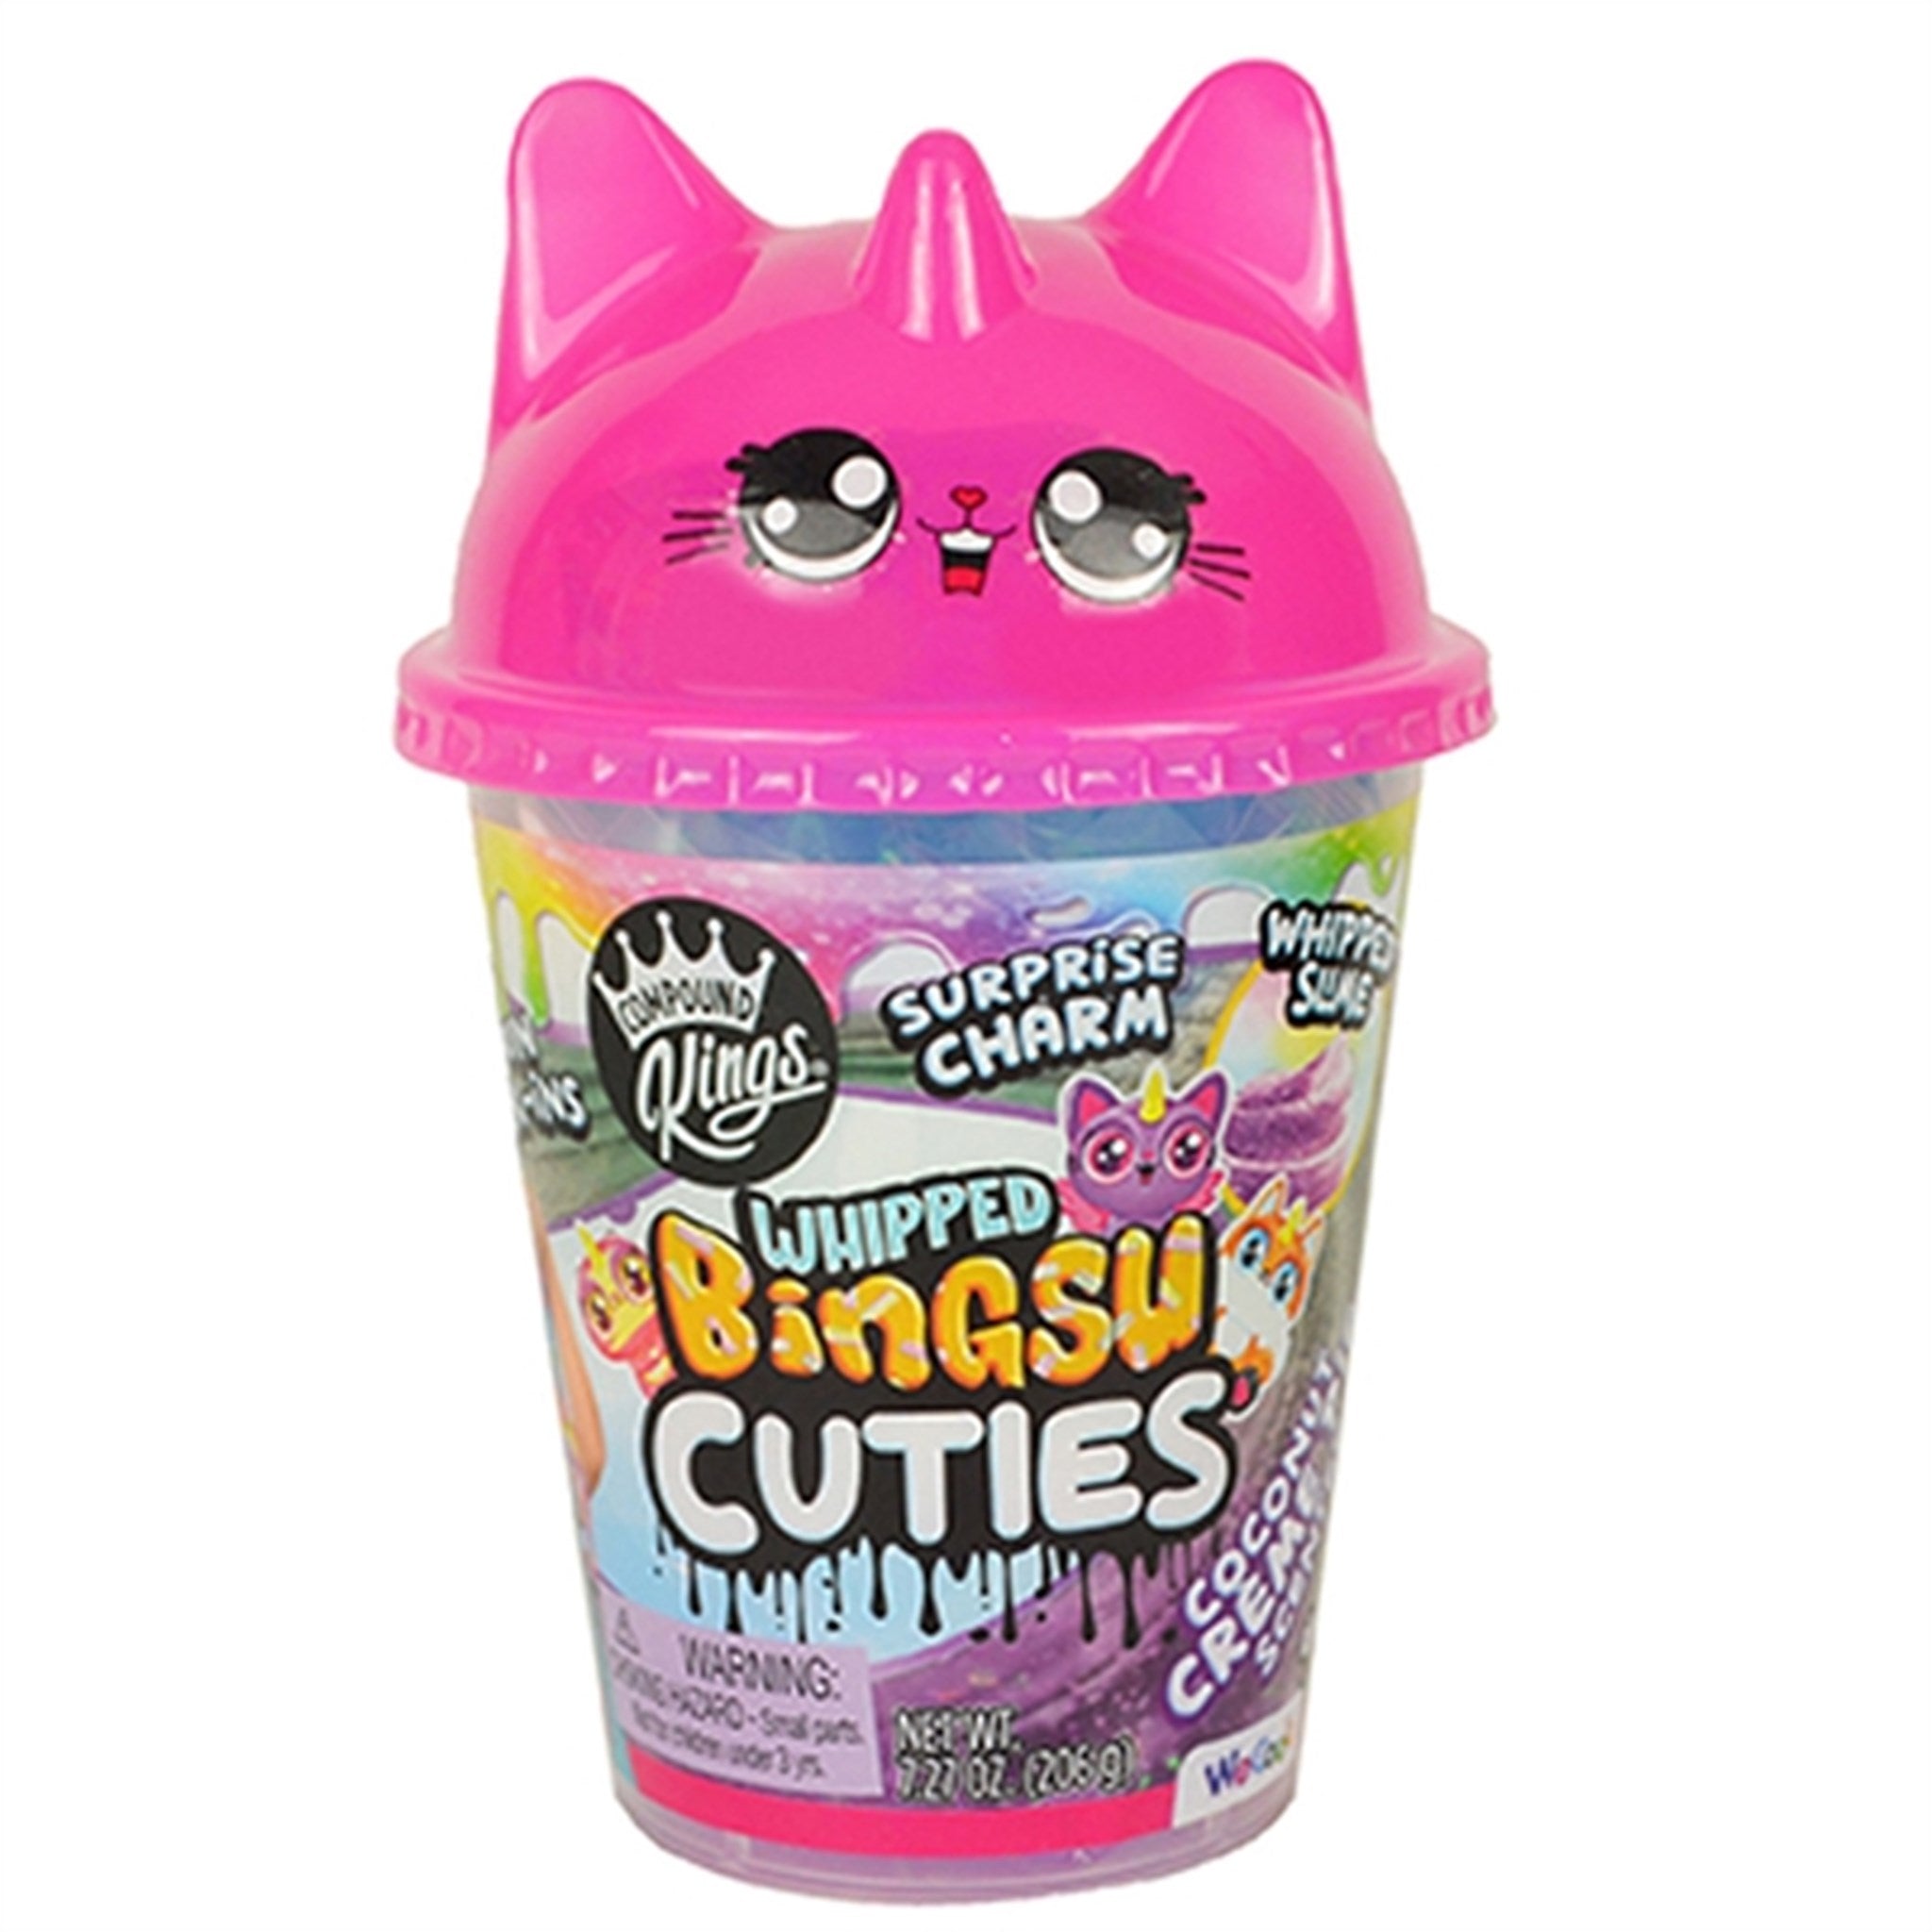 Compound Kings Scented Slime Bingsu Cuties Coconut Cream 3